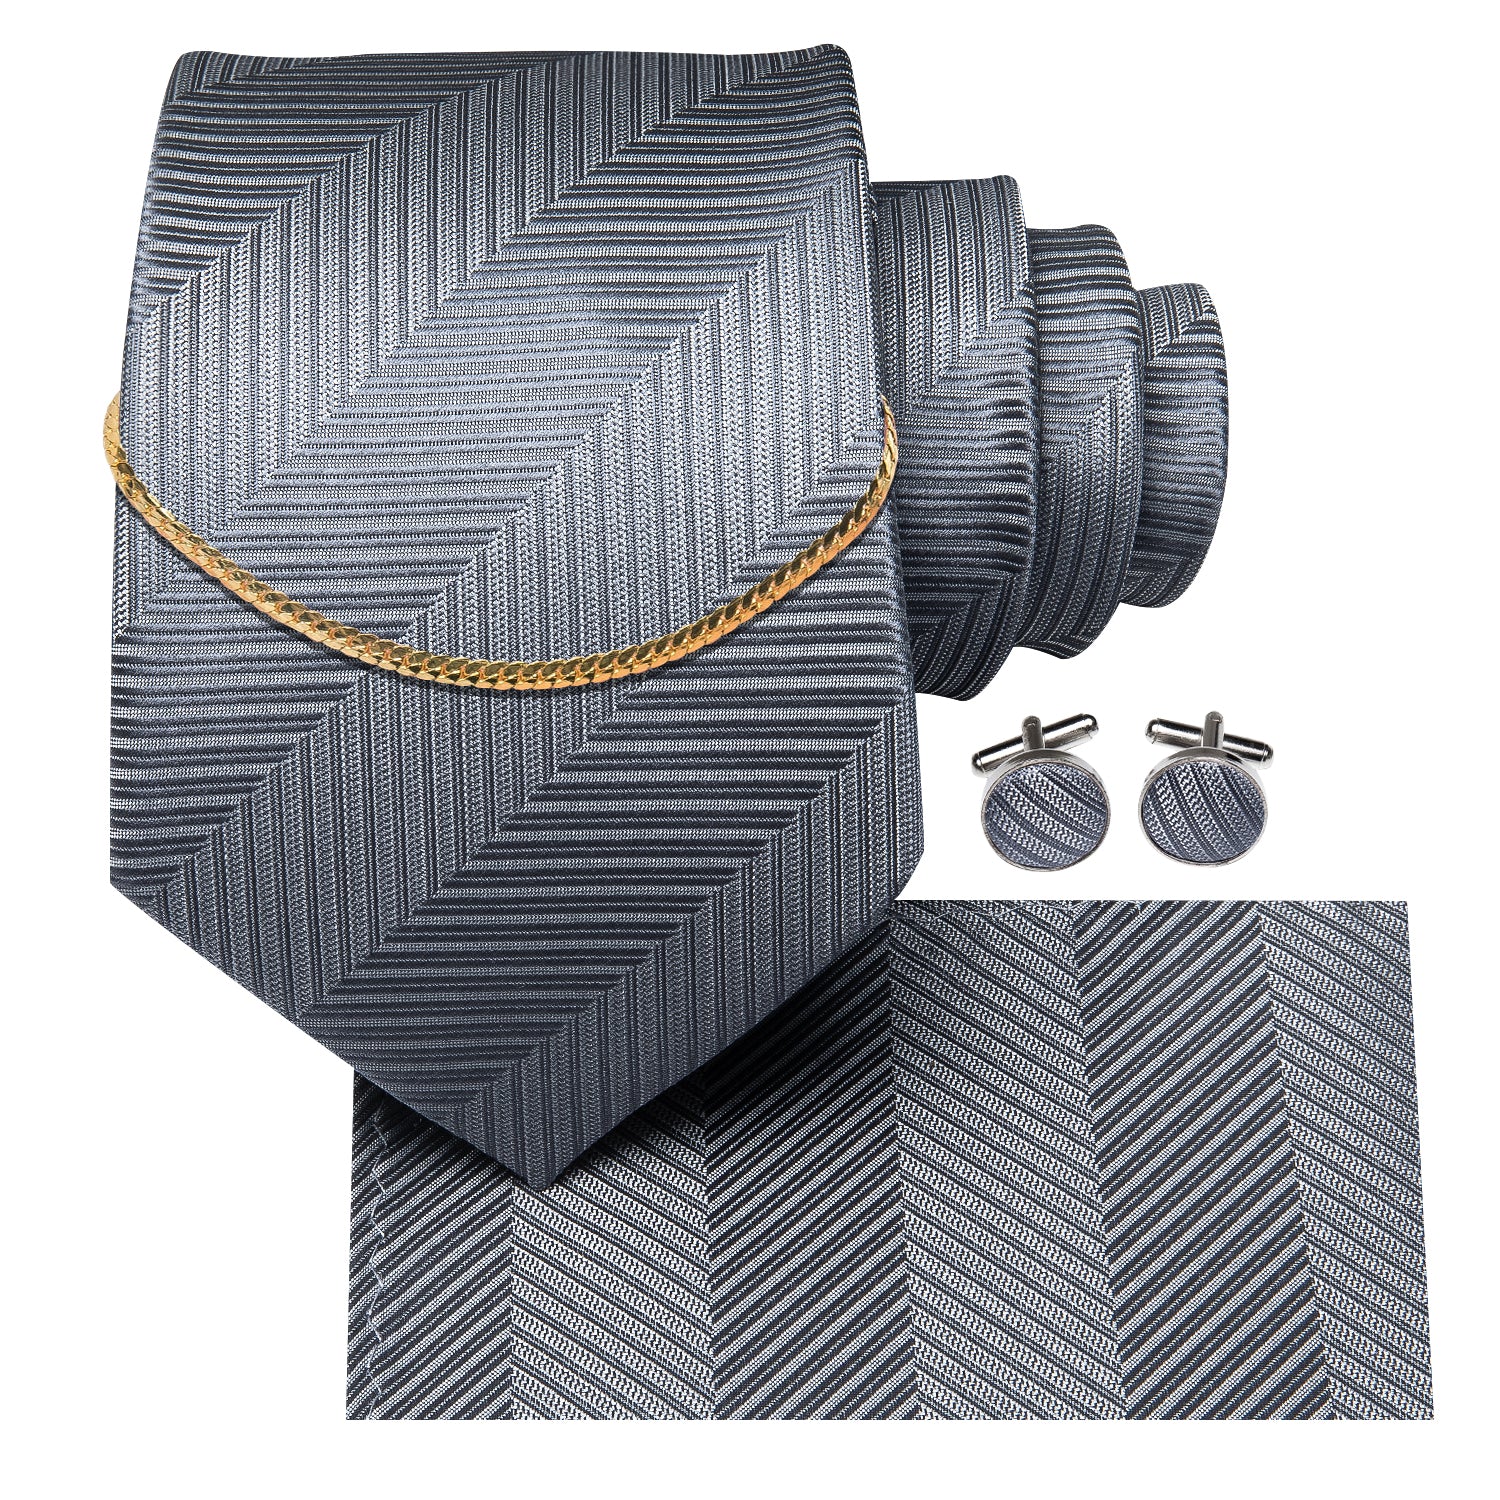 Essential Grey Striped Tie Pocket Square Cufflinks Set With Golden Chain